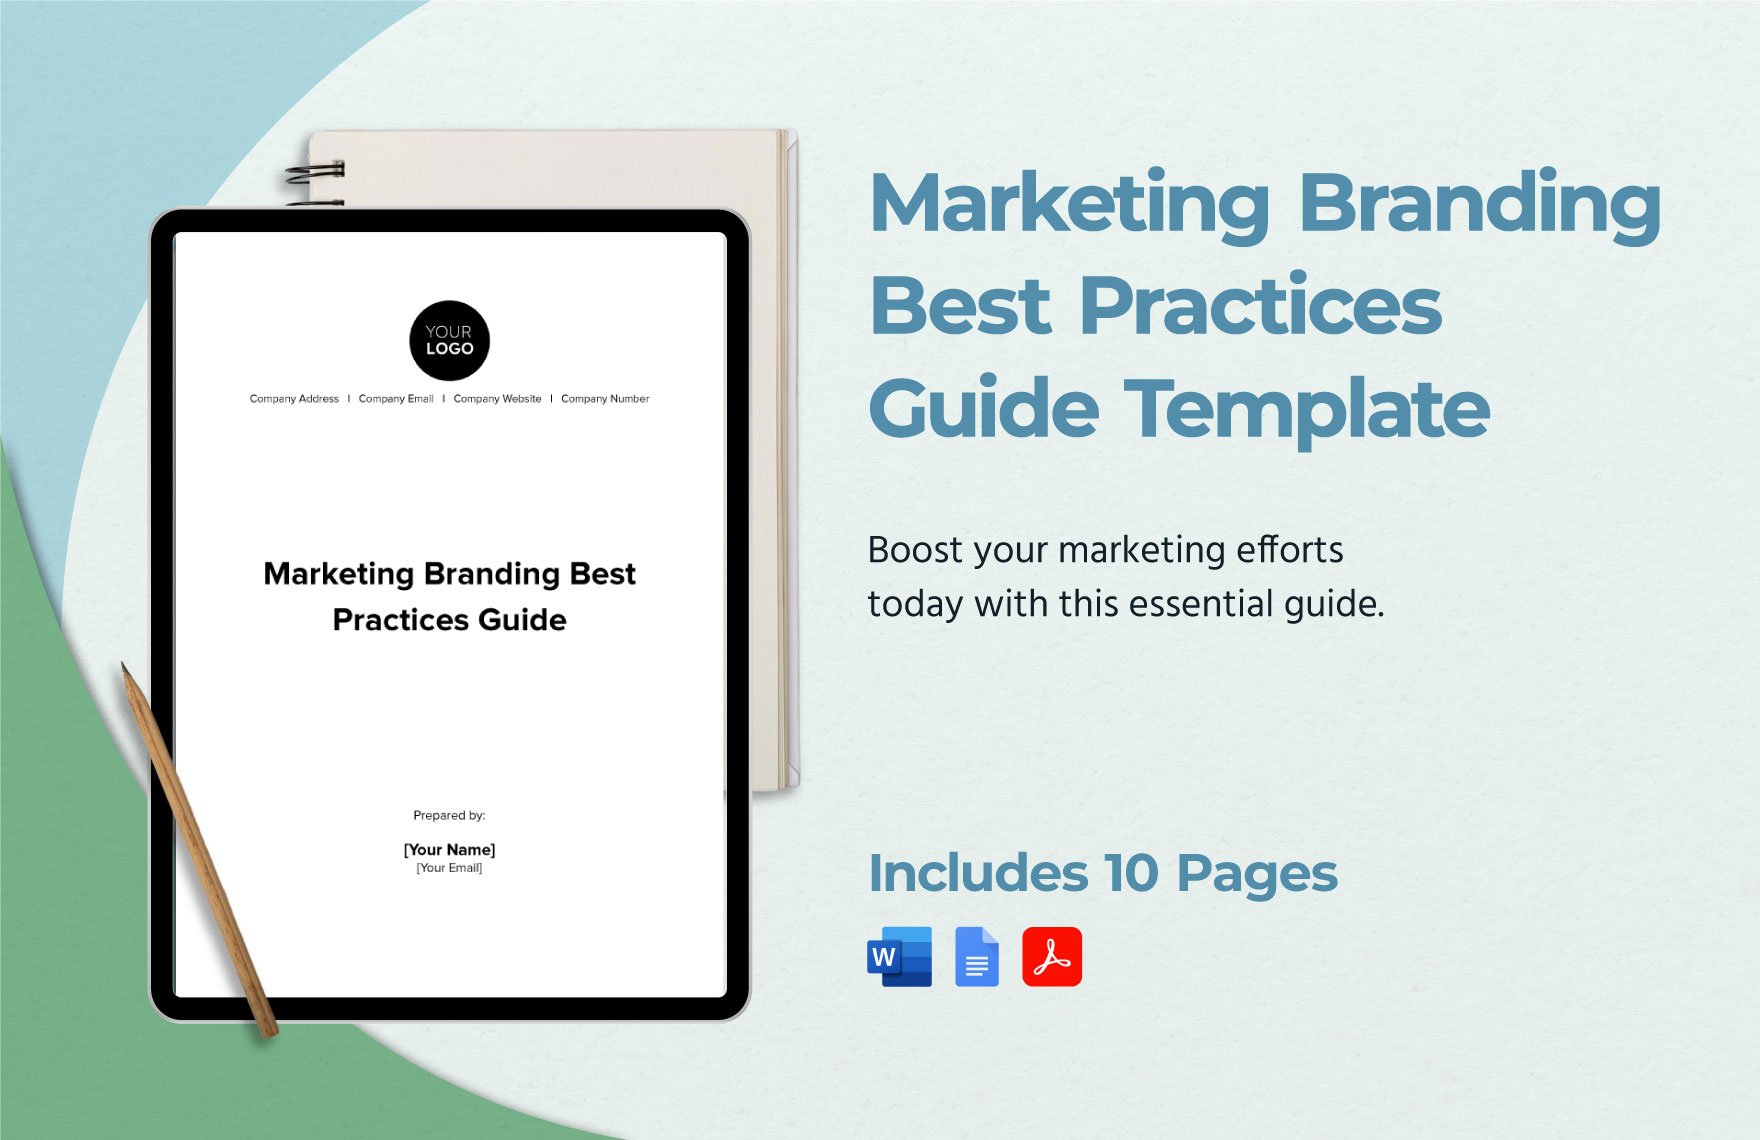 Marketing Branding Best Practices Guide Template